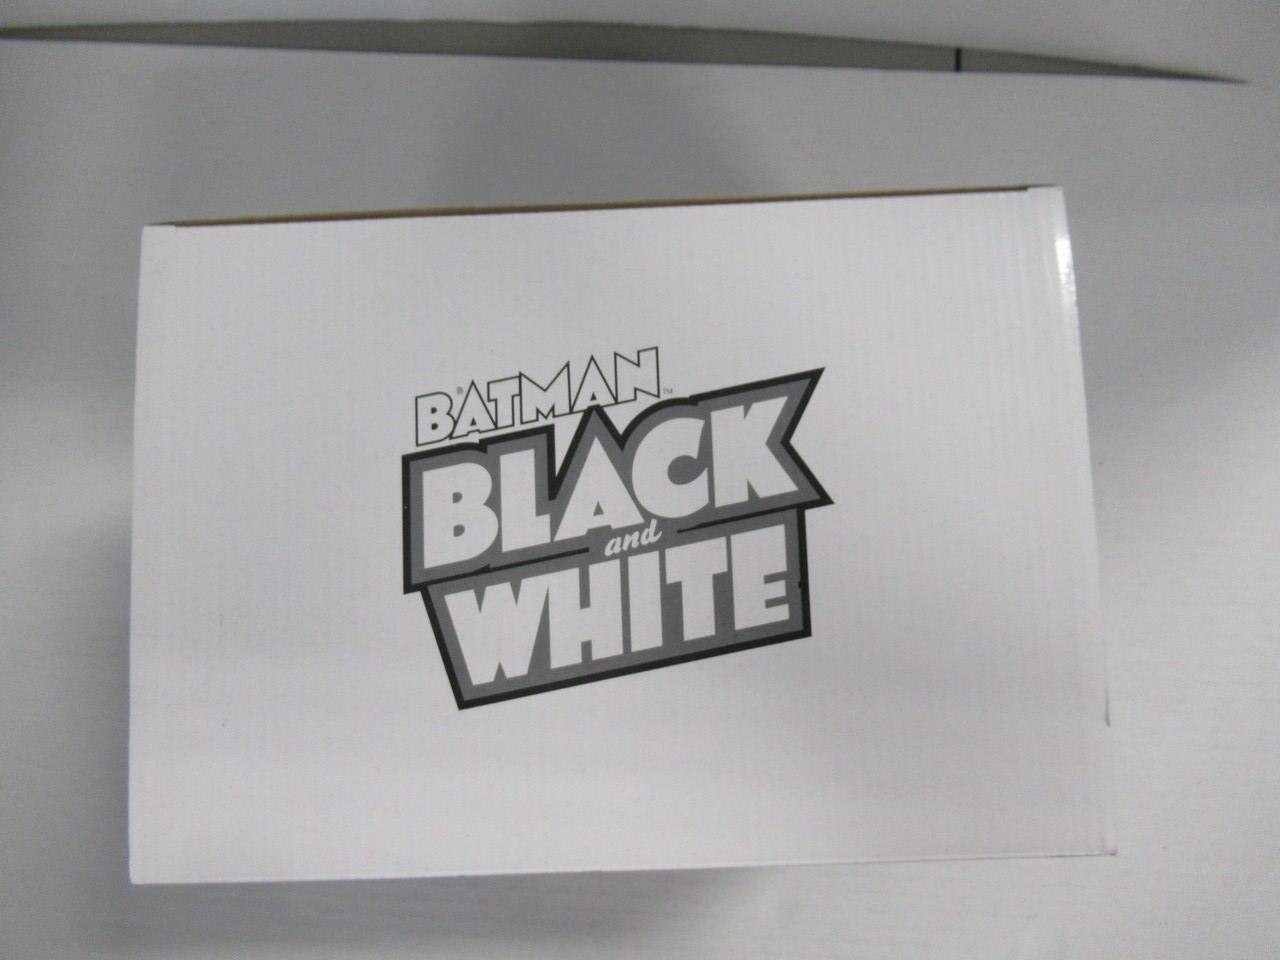 Batman Black and White Statue/Tony Millionaire